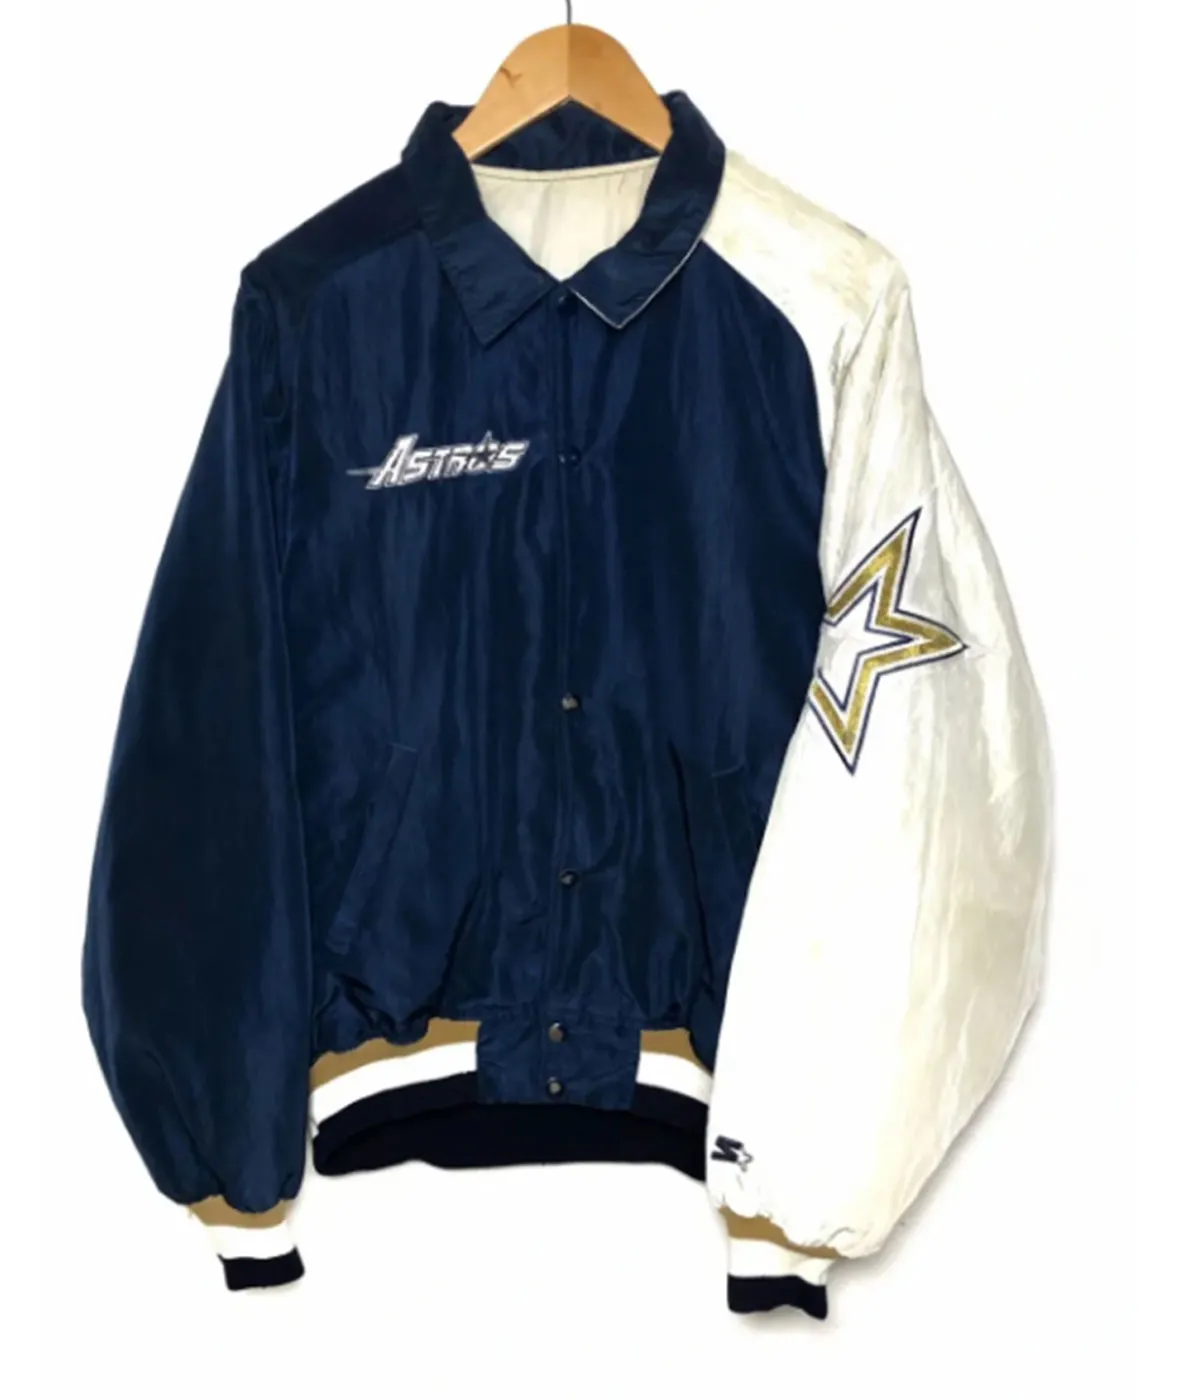 USA Jacket Astros Sweater Jacket